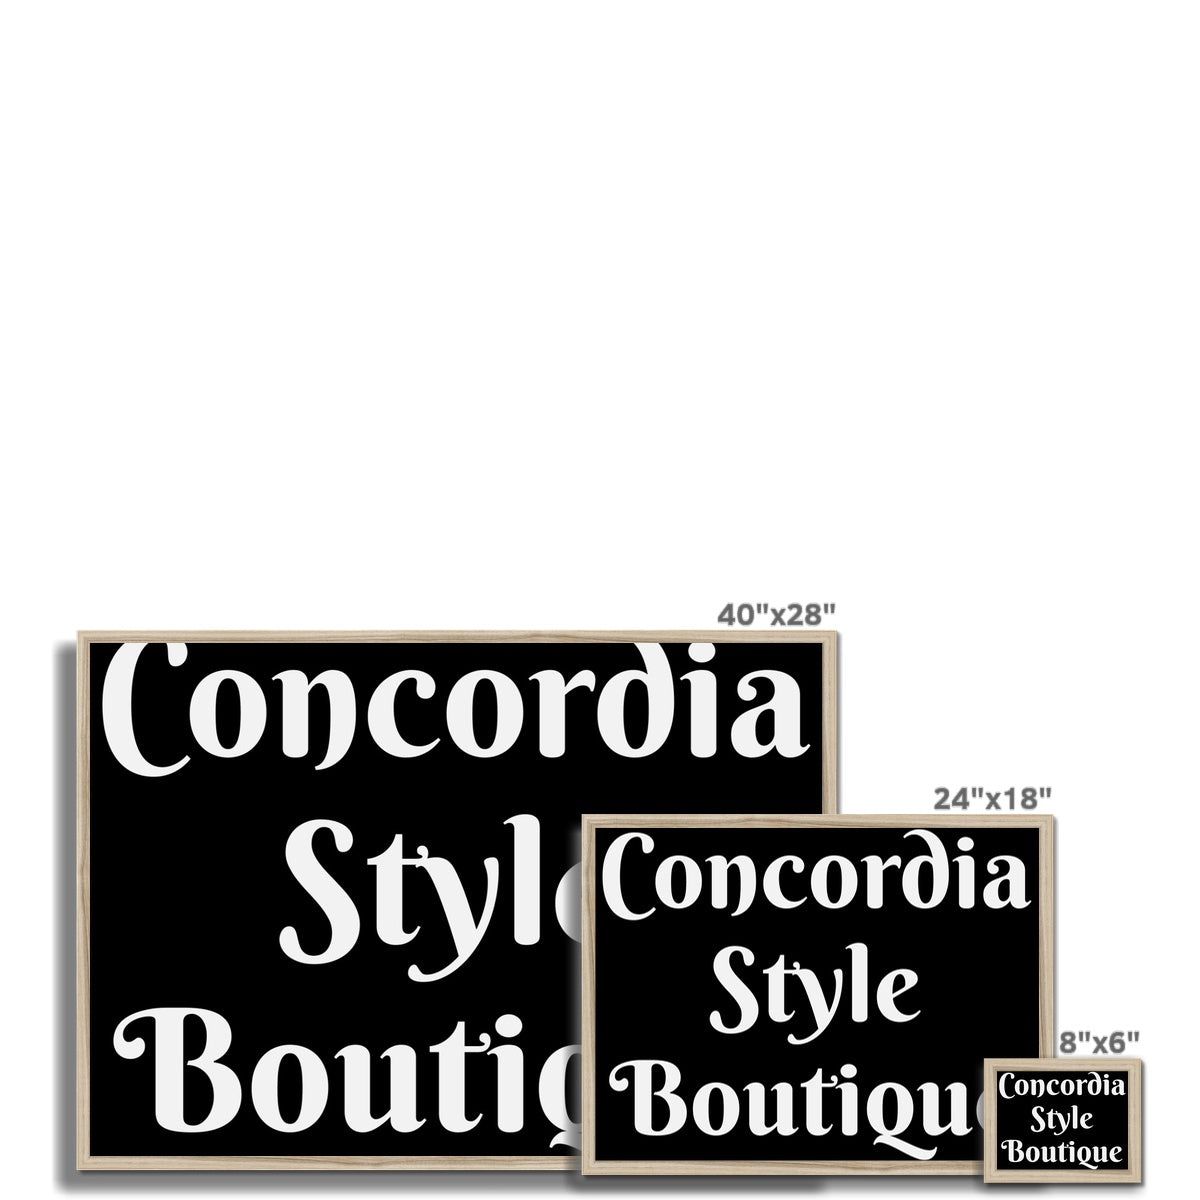 Concordia Style Boutique Framed Print - Premium Fine art from Prodigi - Just $26! Shop now at Concordia Style Boutique